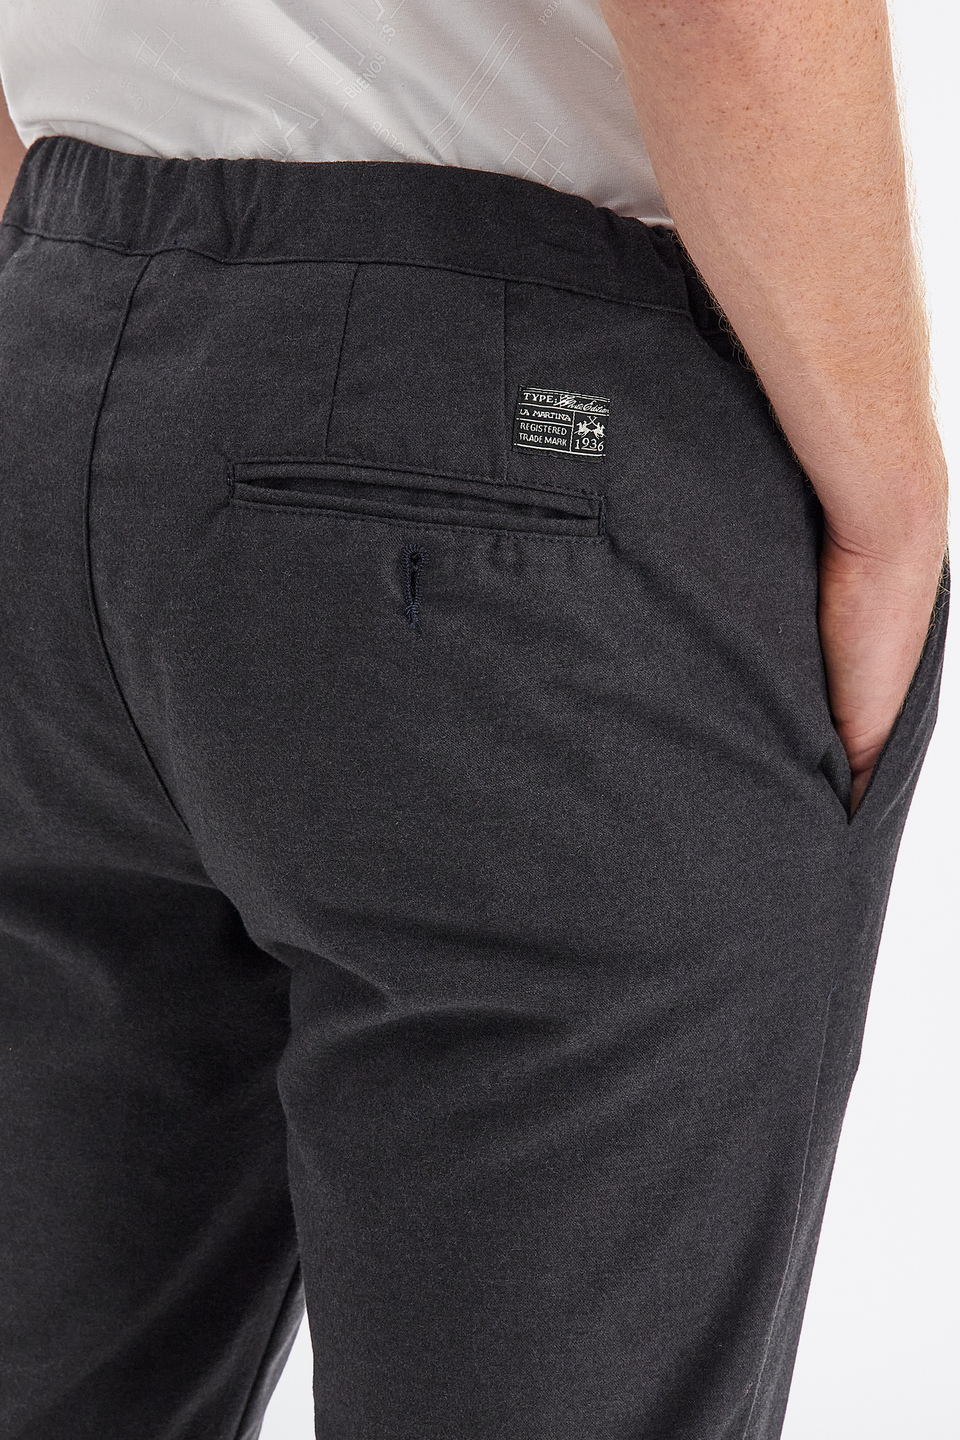 Pantalon Timeless homme en tissu mixte en flanelle regular fit | La Martina - Official Online Shop